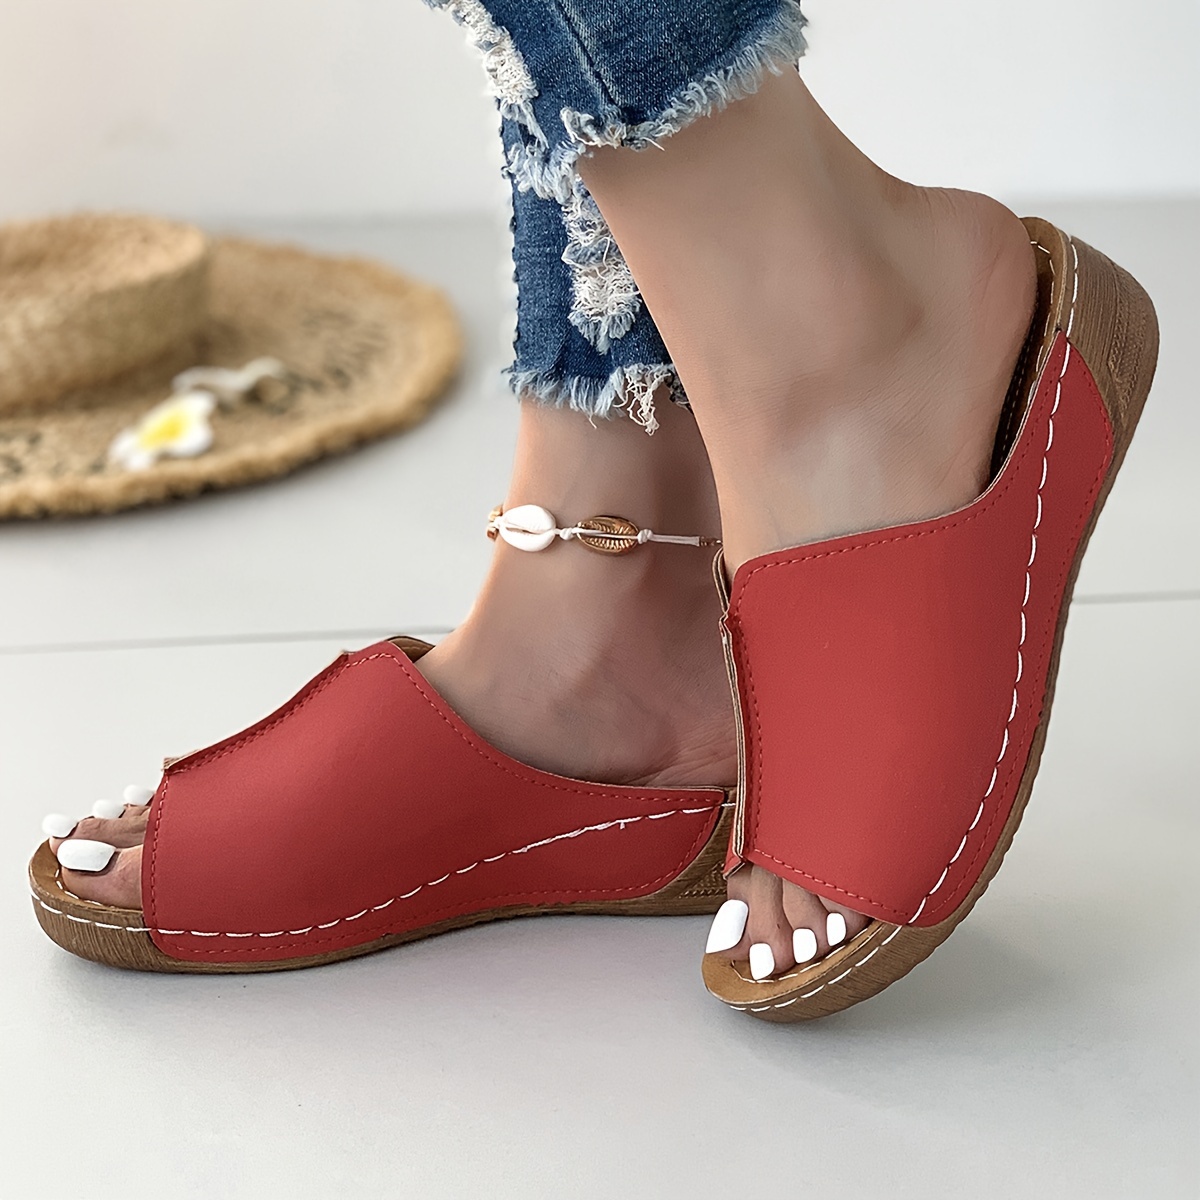 solid color stylish sandals women s platform slip soft sole details 7